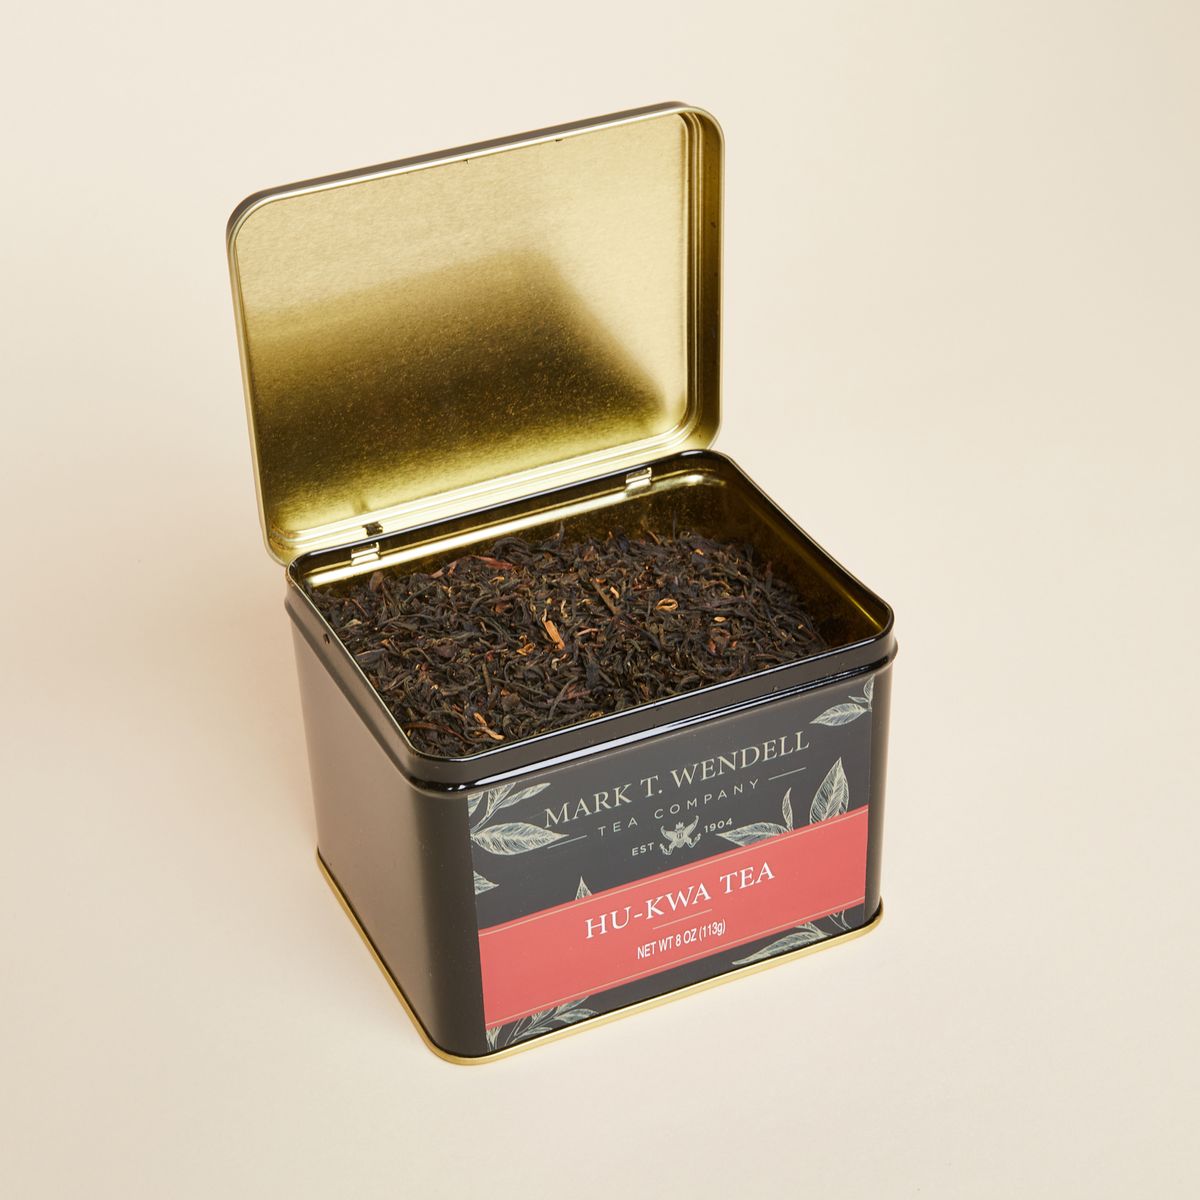 A pile of black tea called Hu-Kwa tea